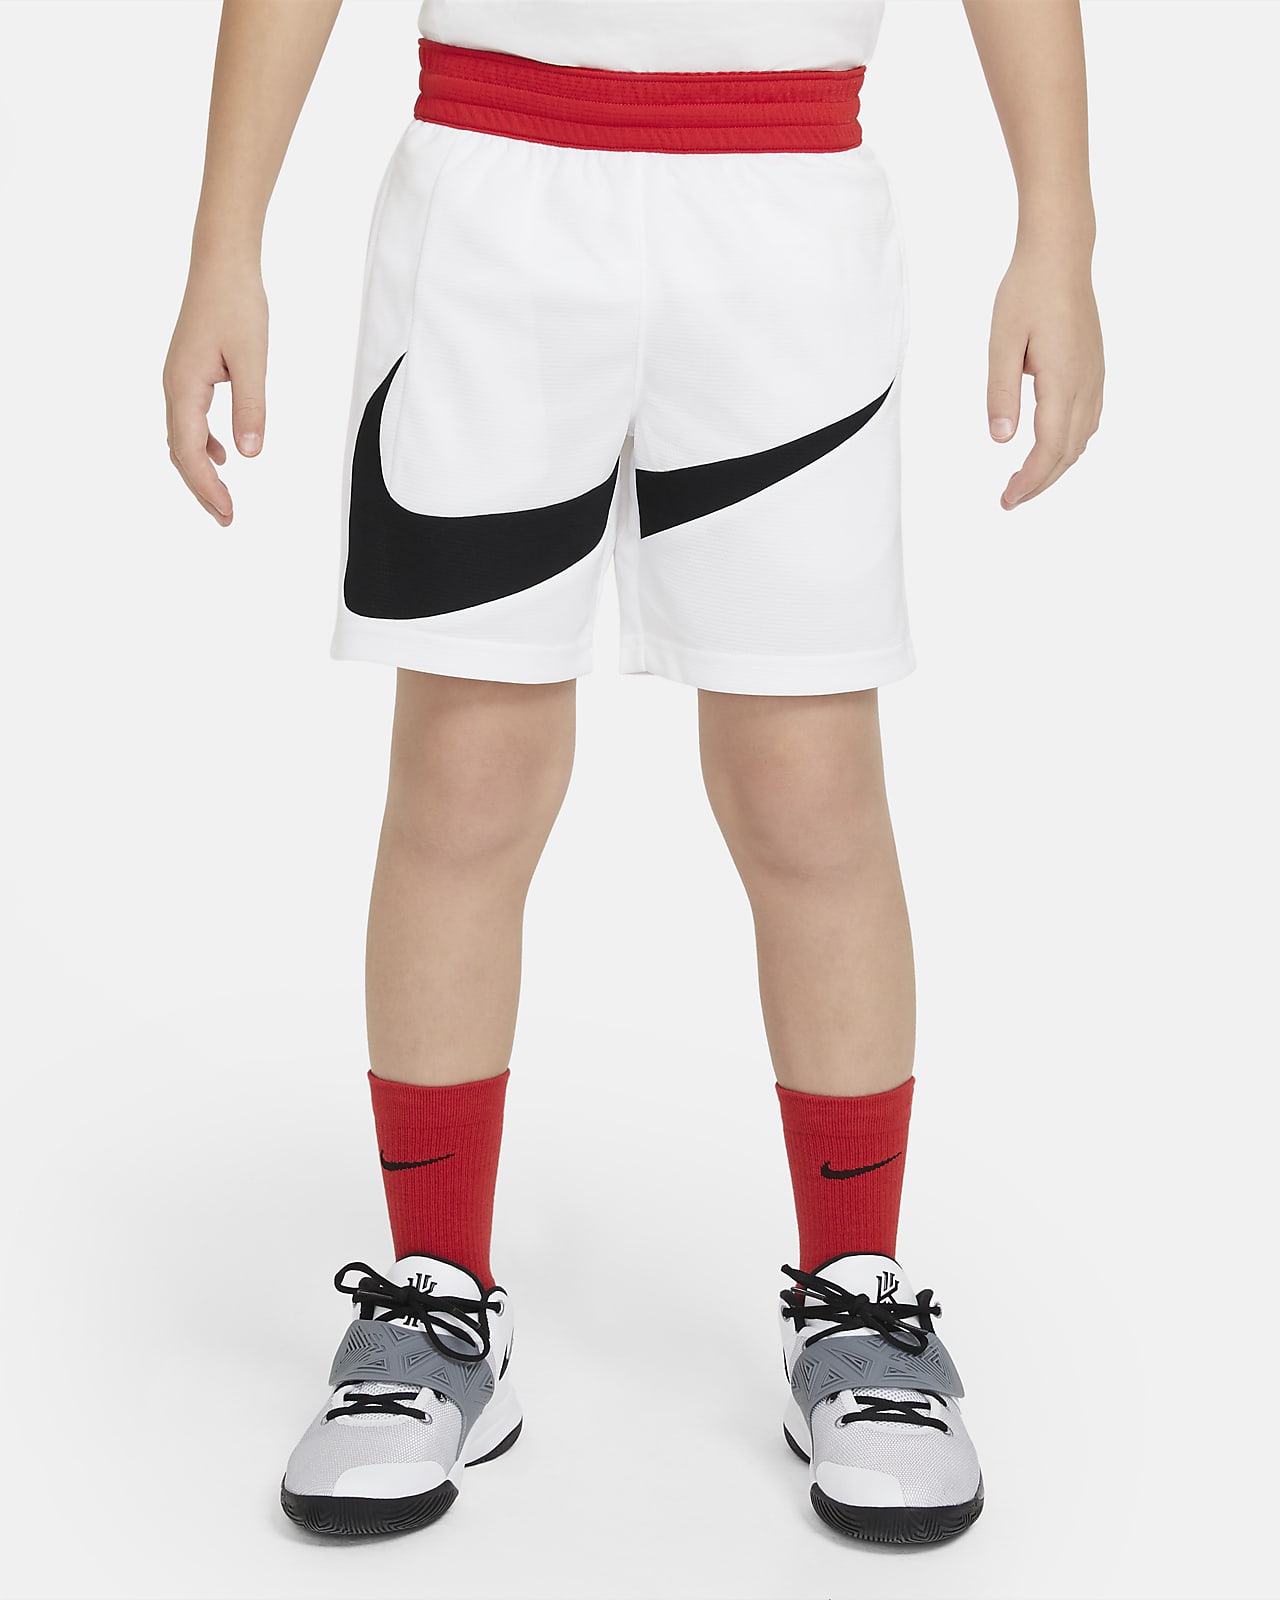 Shopping >nike youth basketball shorts big sale - OFF 79%